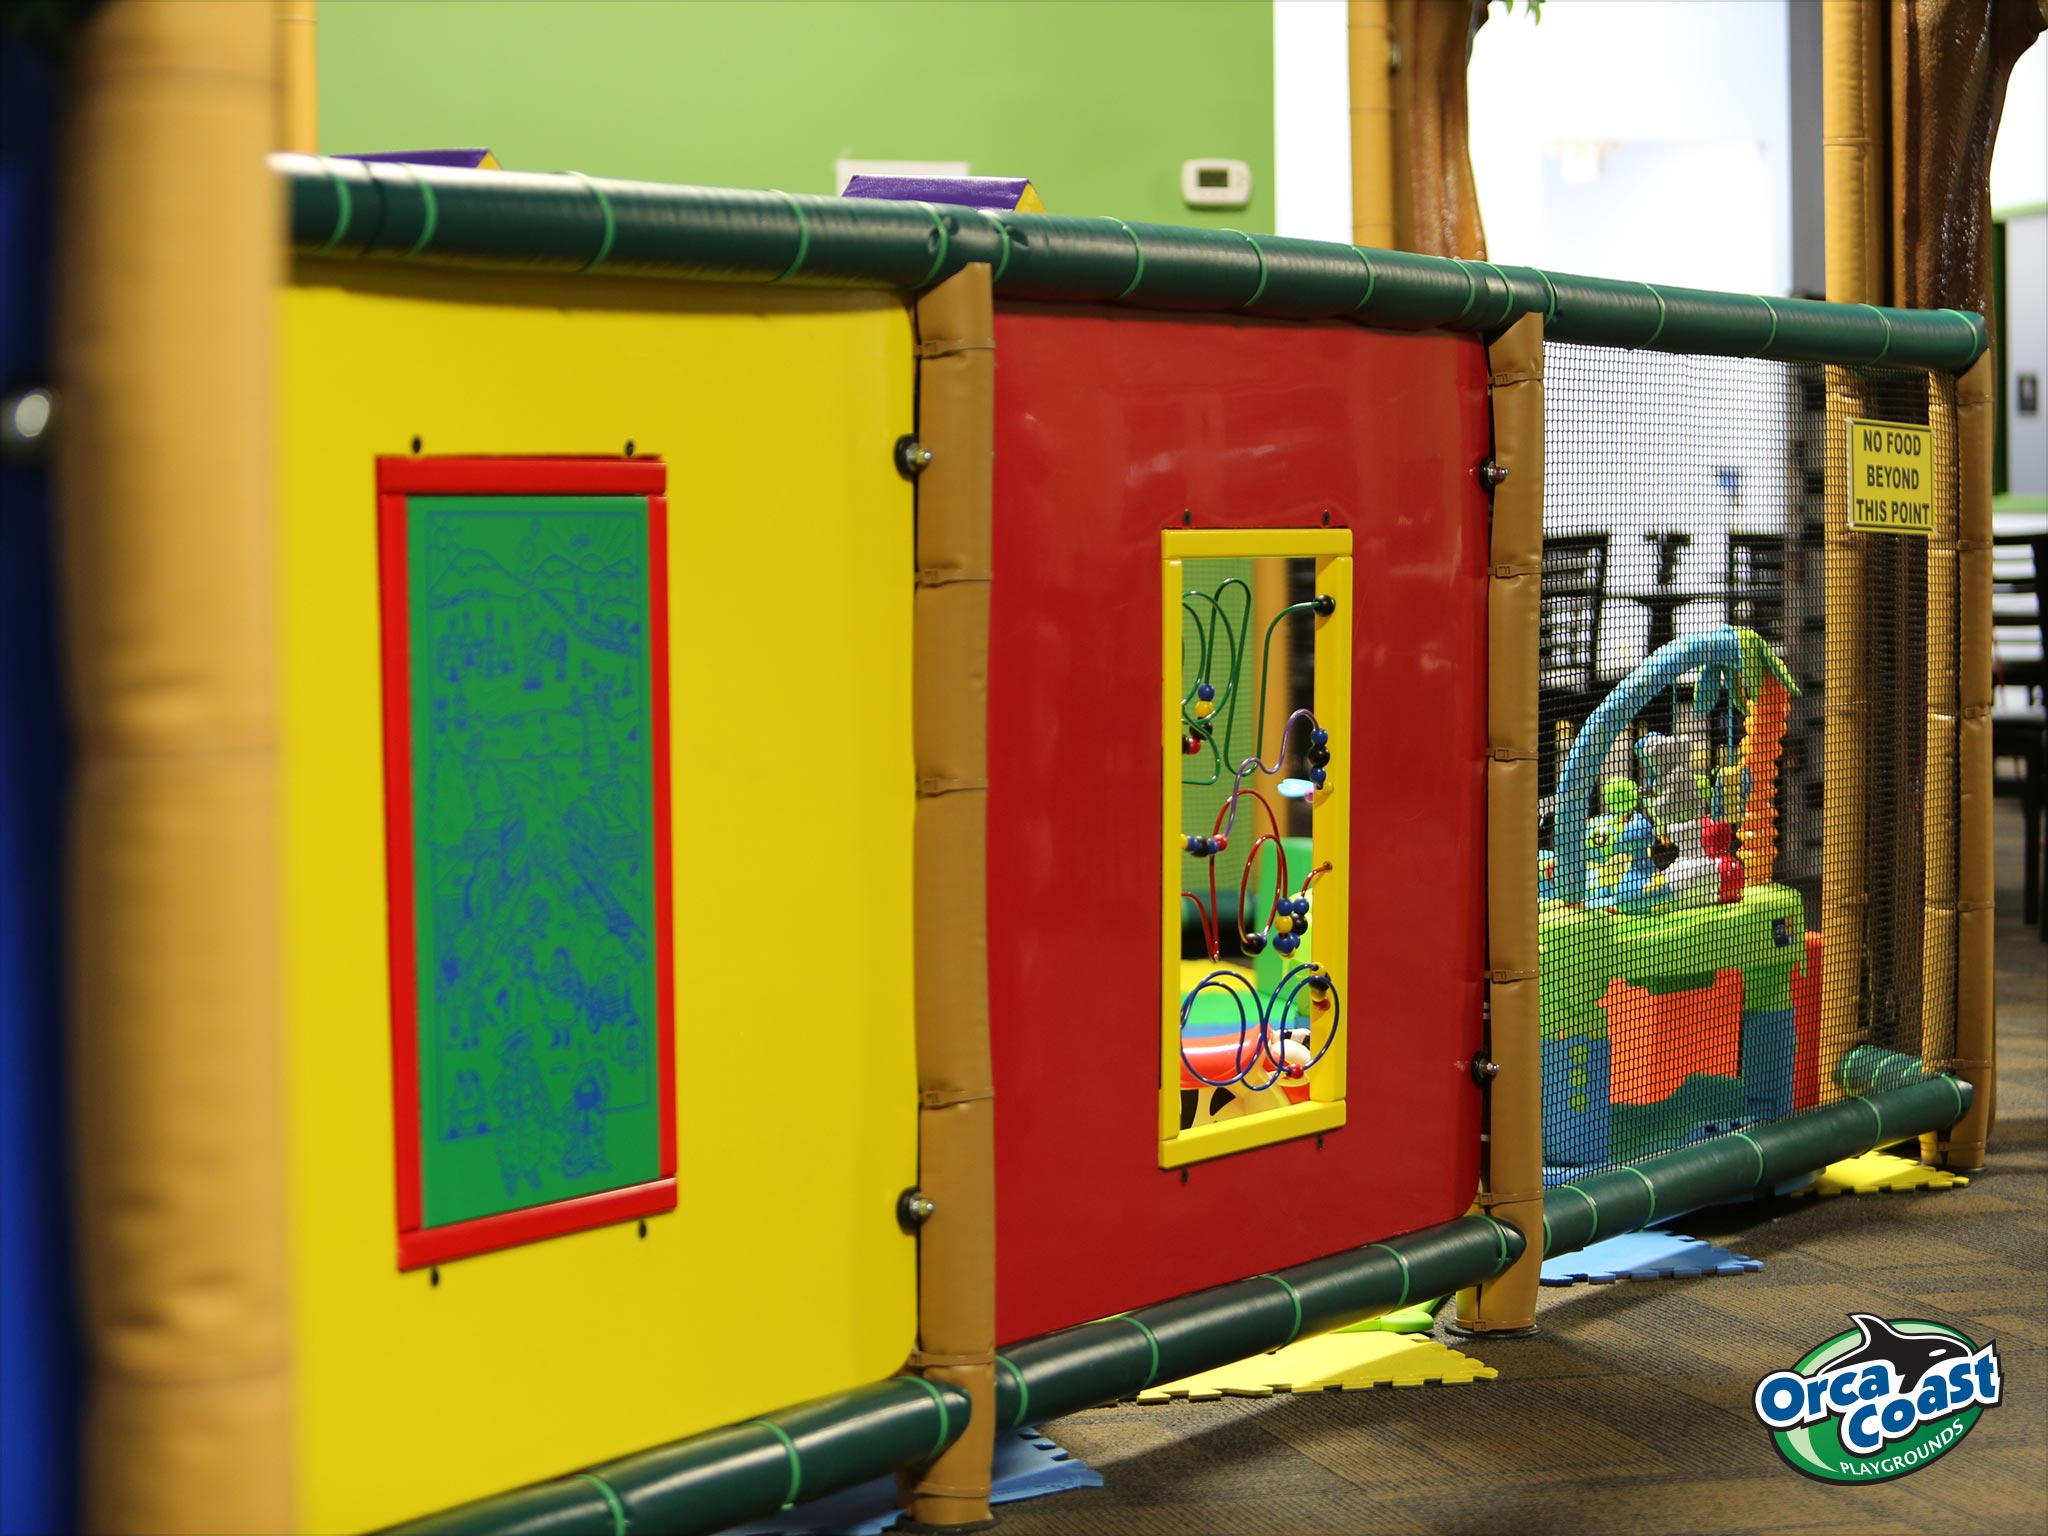 Jungle themed playground at KidsPlay-AllDay in Calgary, AB